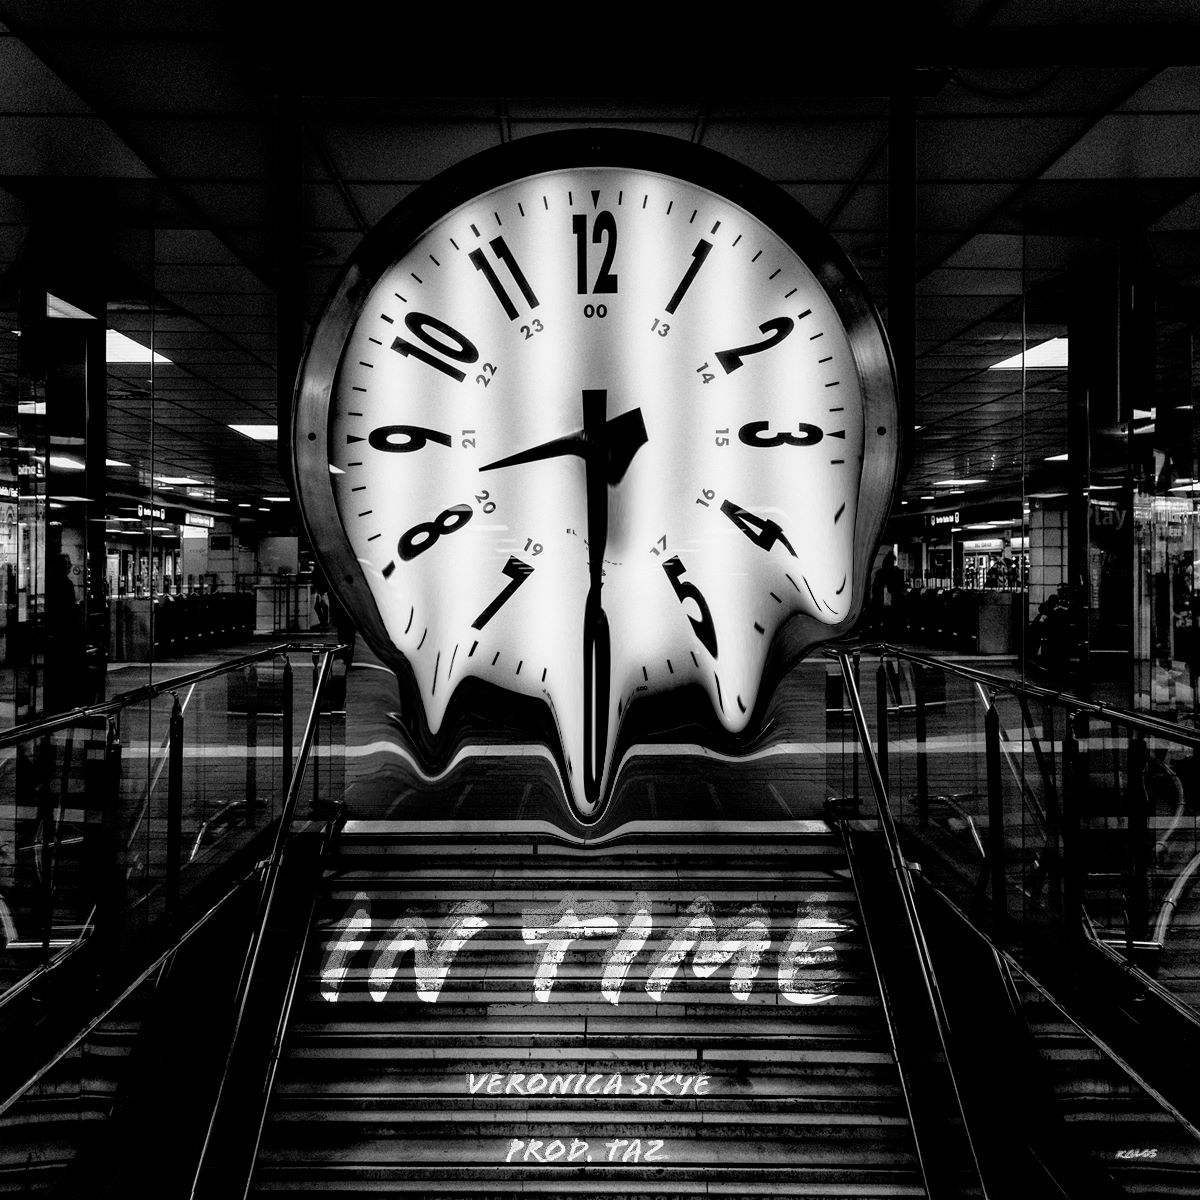 Veronica Skye - “In time”